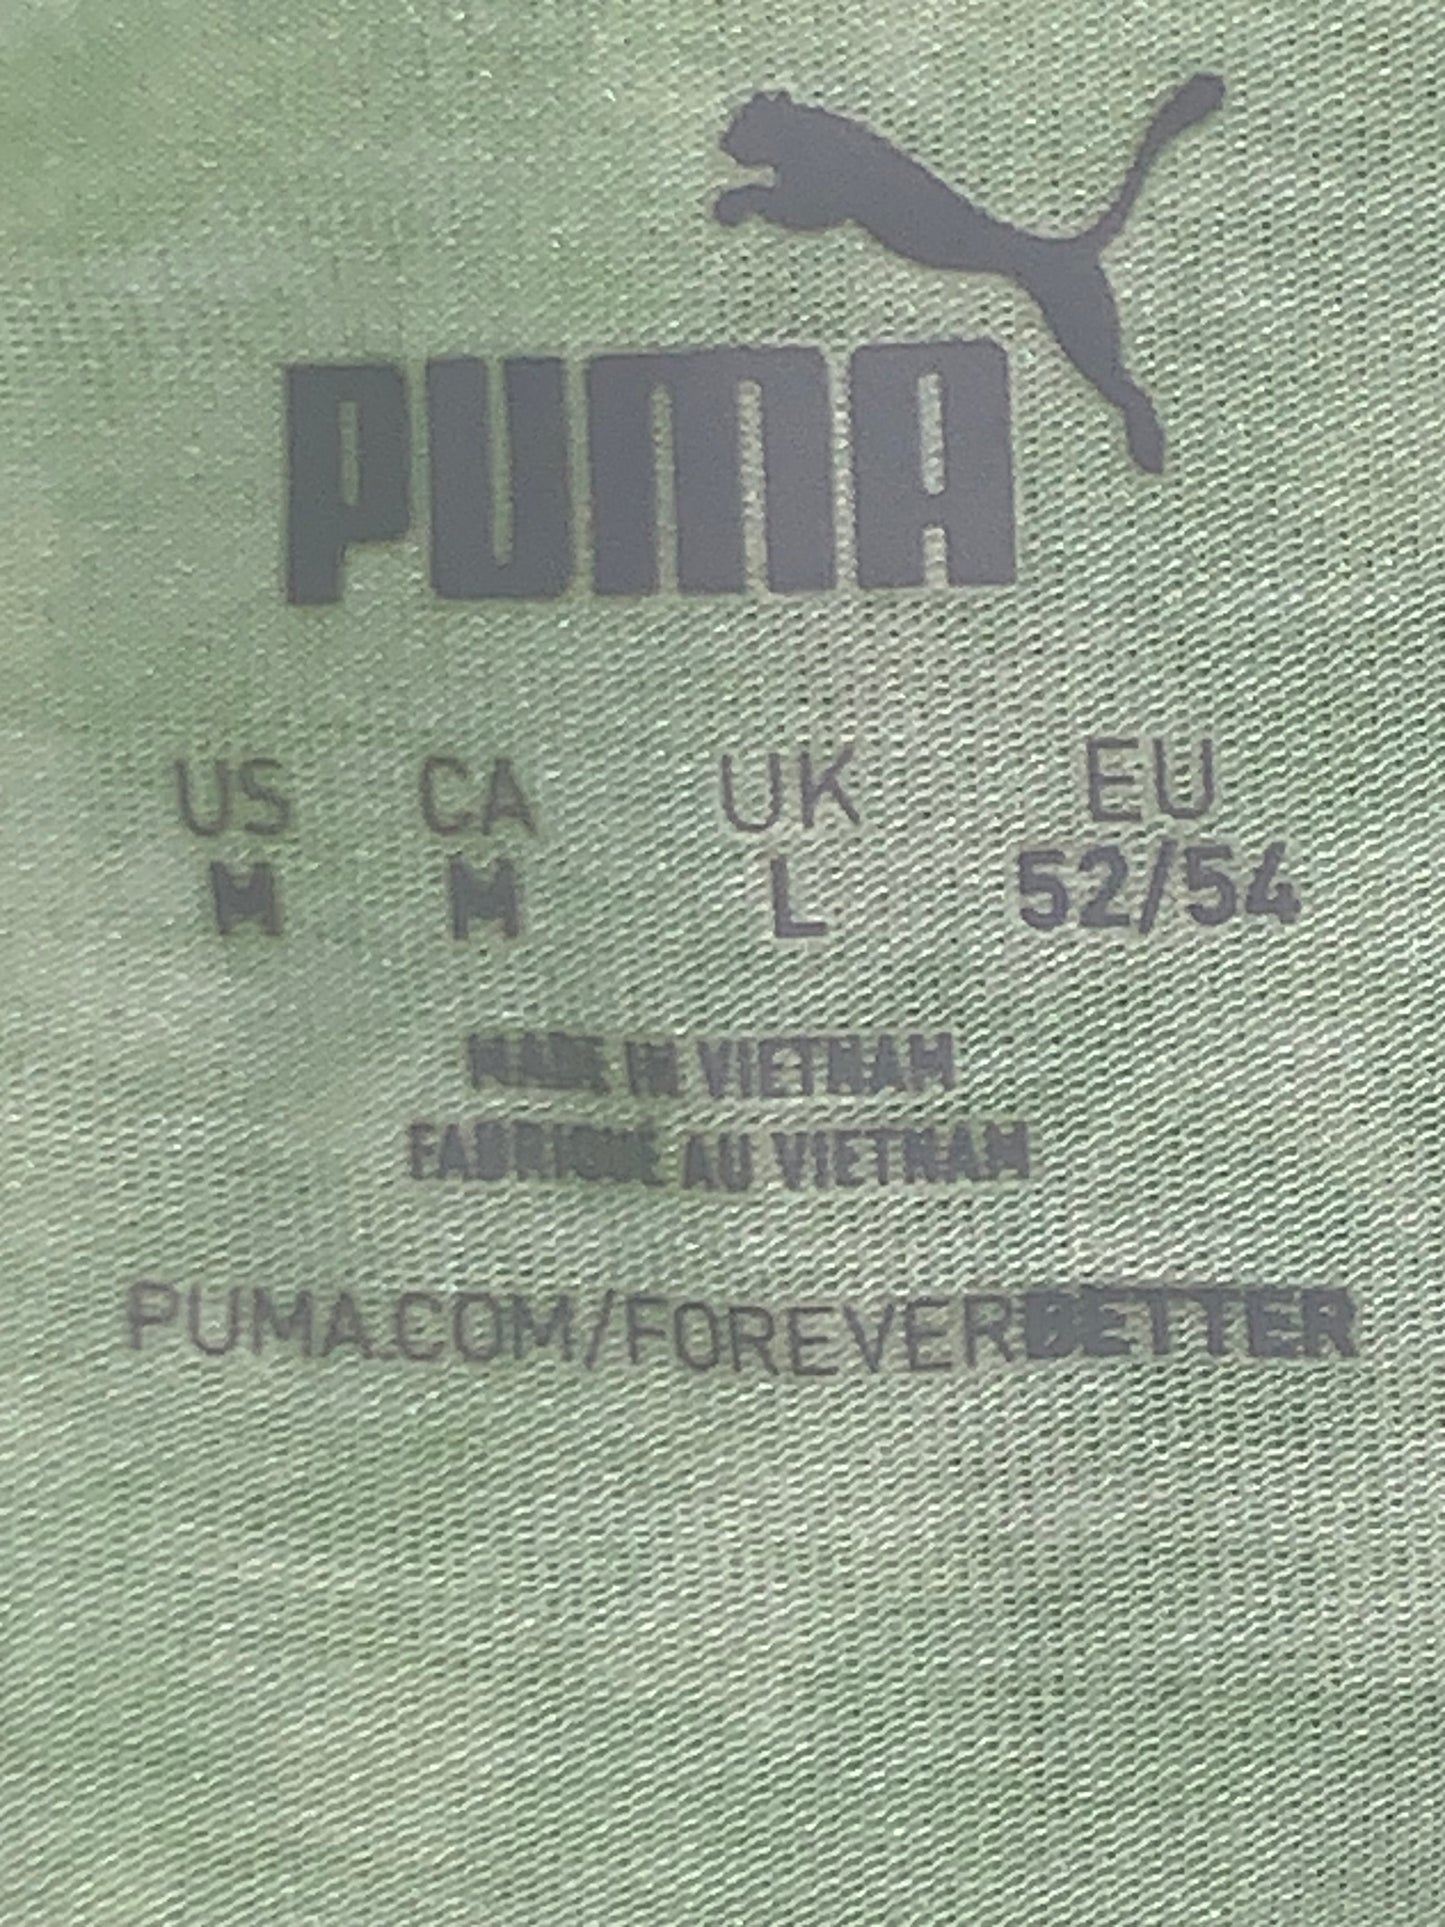 Uniites™,  Puma Like New Mens Golf Shirt, M,  $19.91